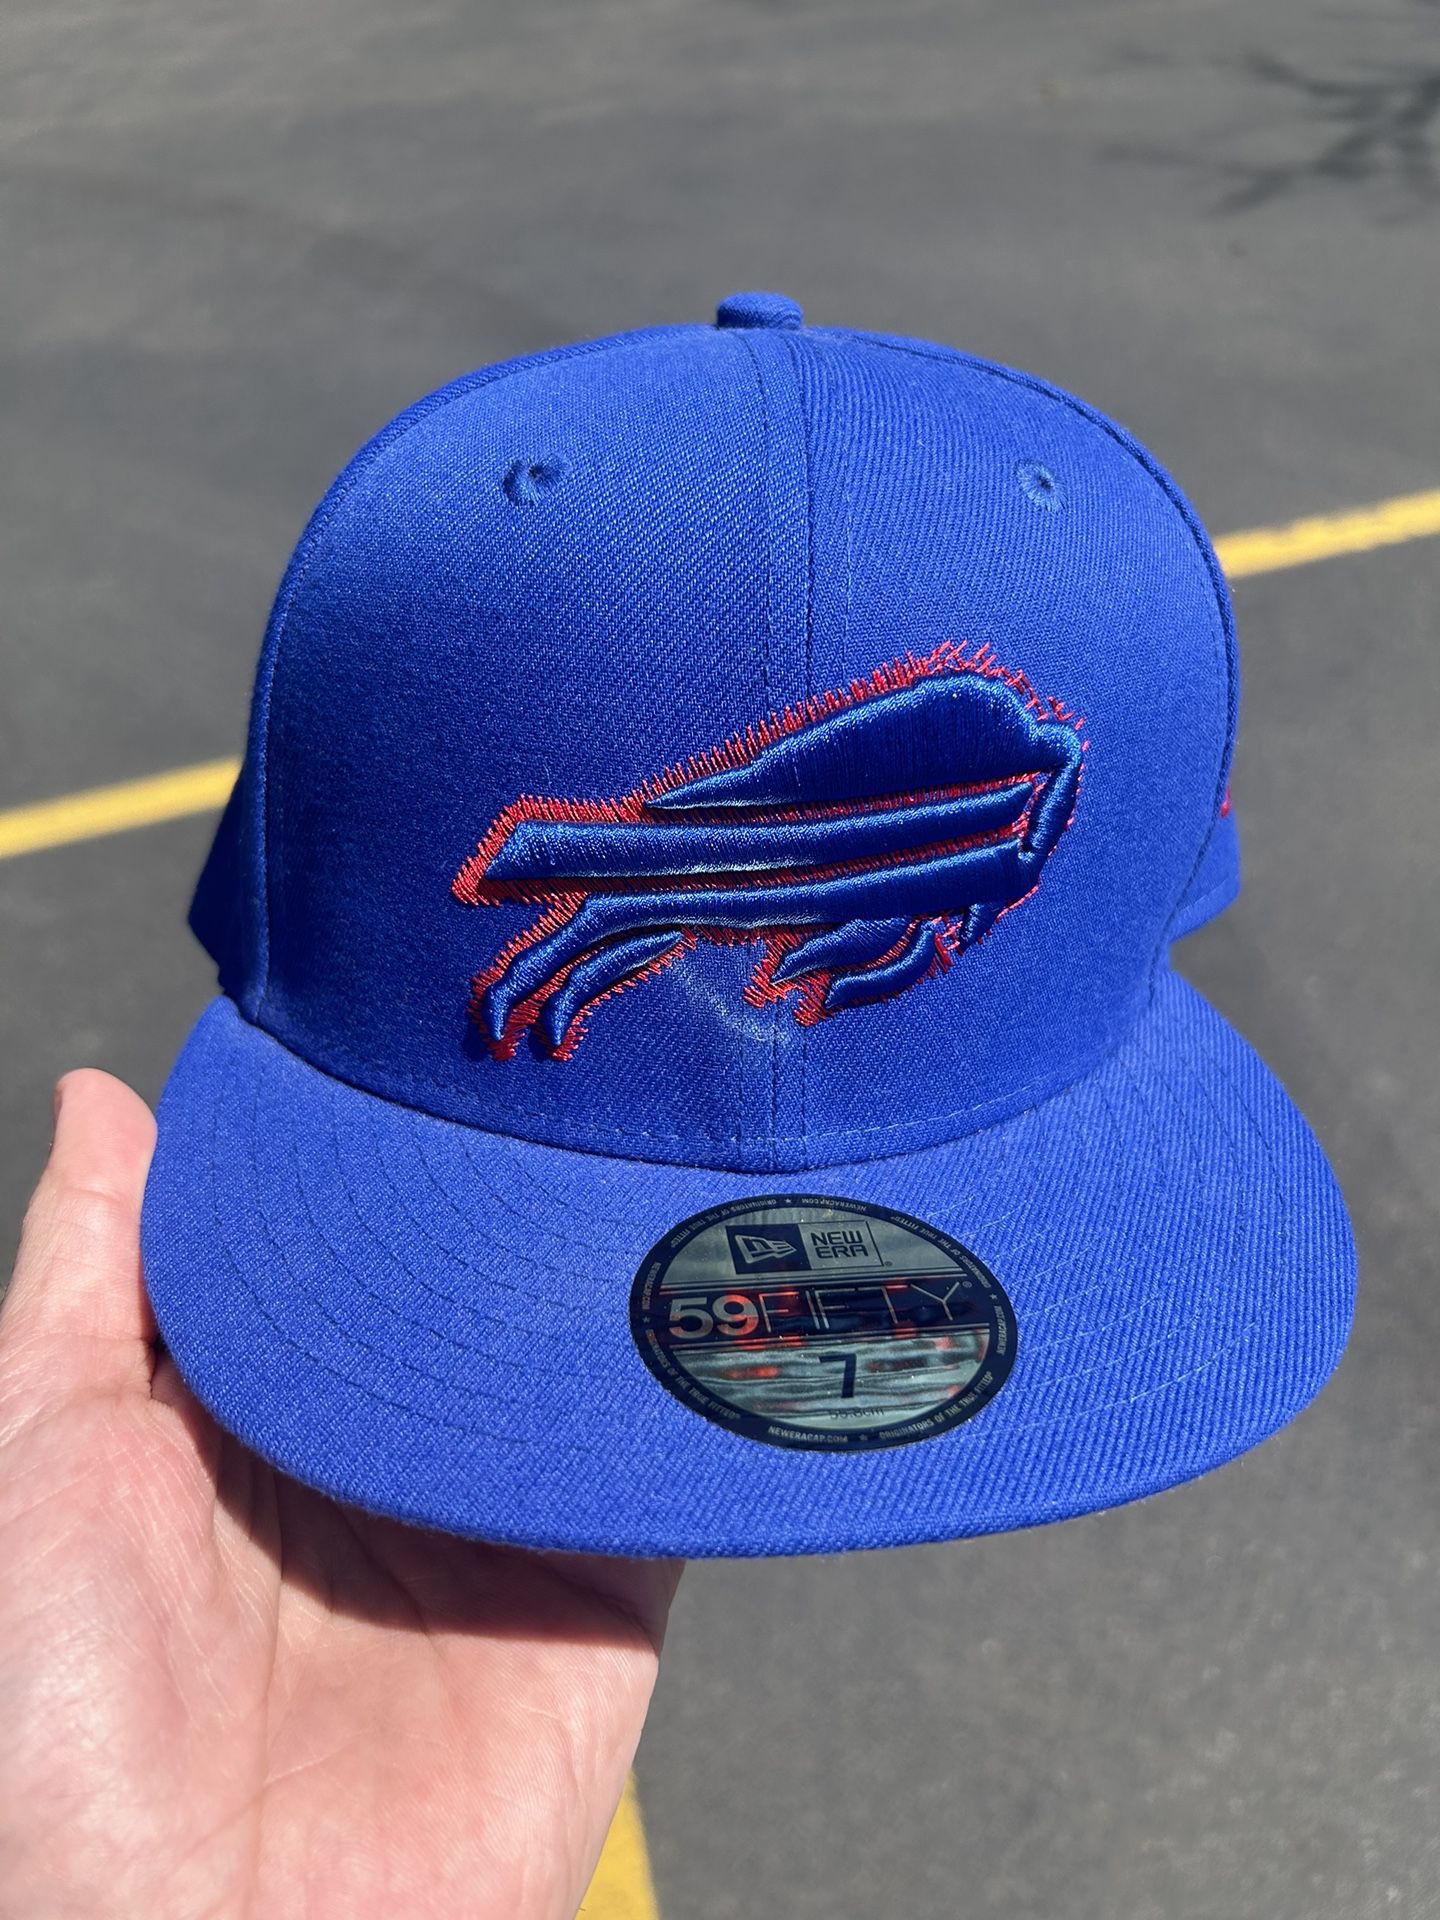 New Buffalo Bills Hat